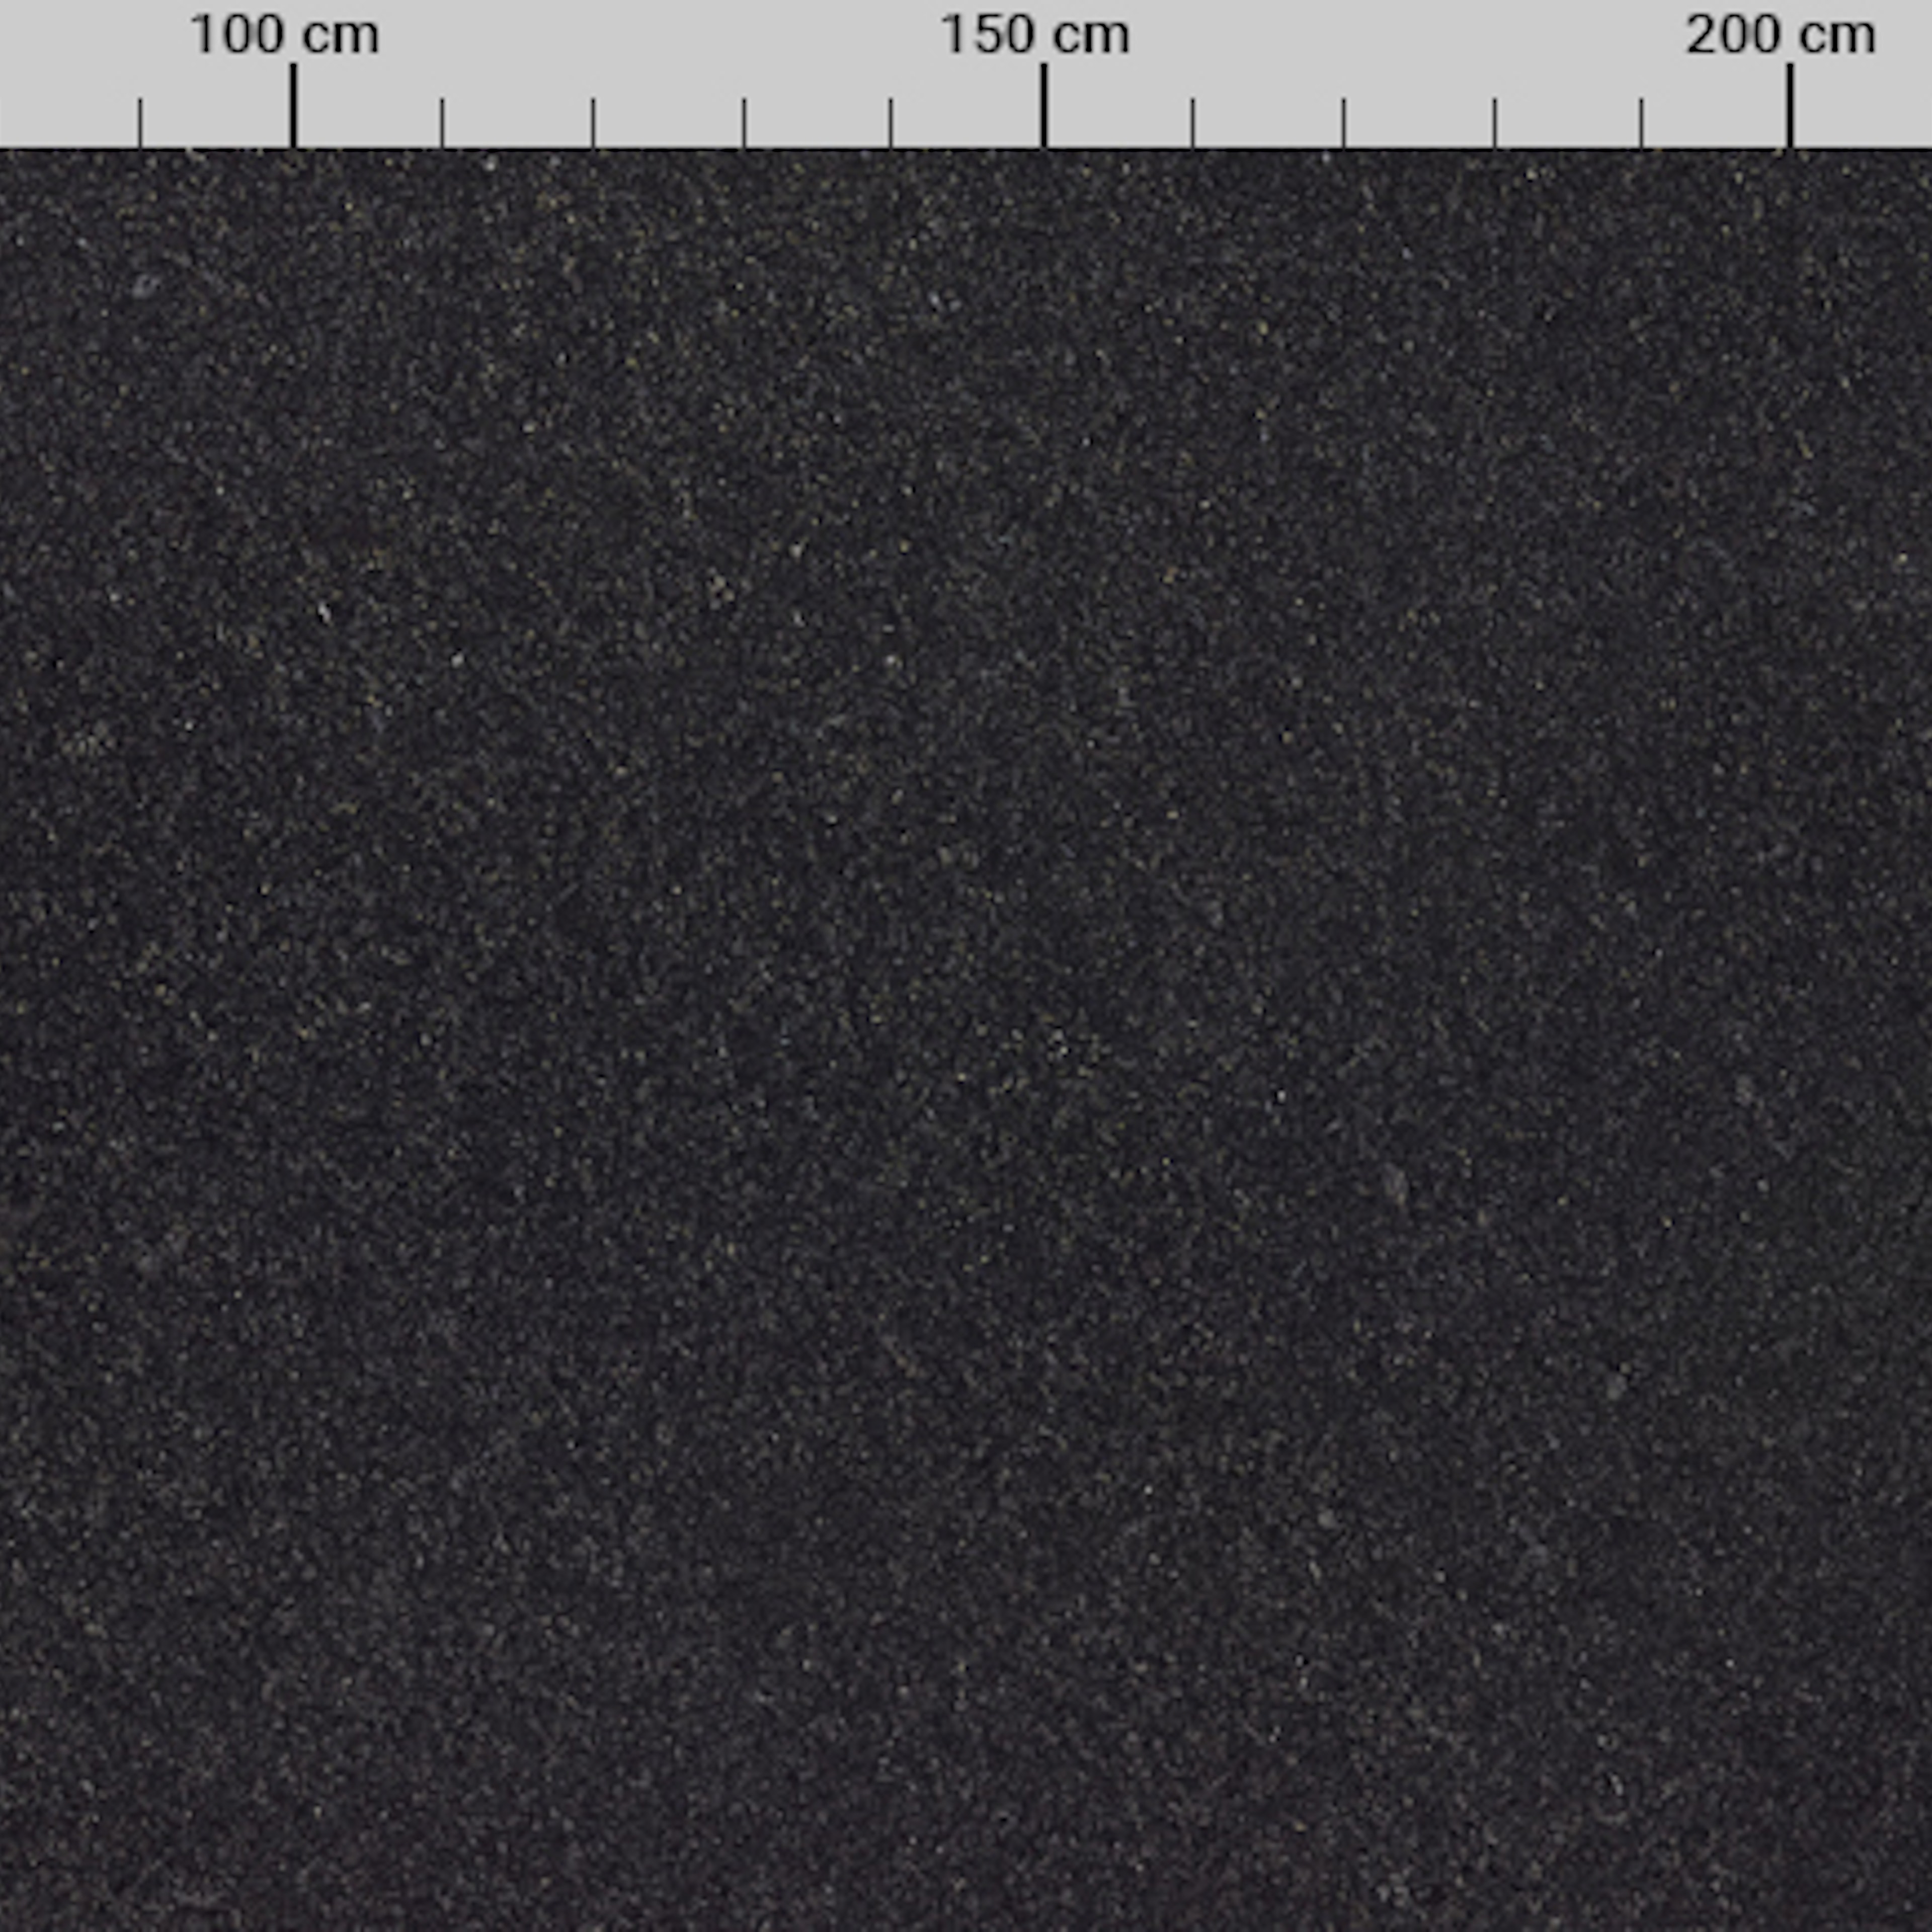 Graniet keukenblad Black label (P)